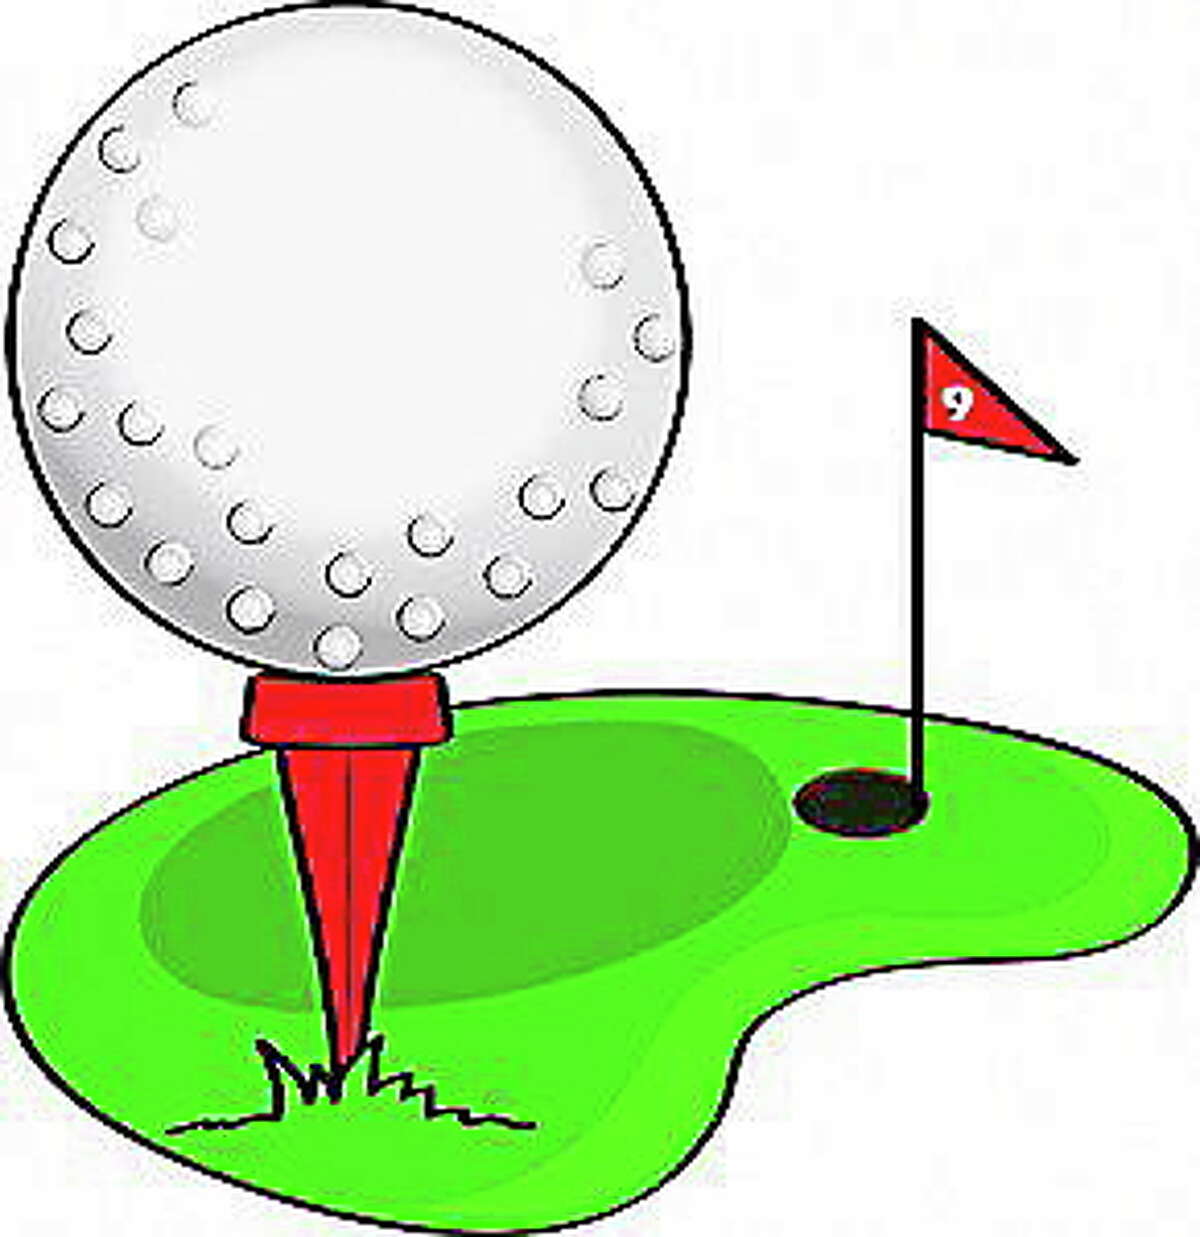 Clip art illustration of a cartoon golf ball, sitting on a tee, on a golf course.